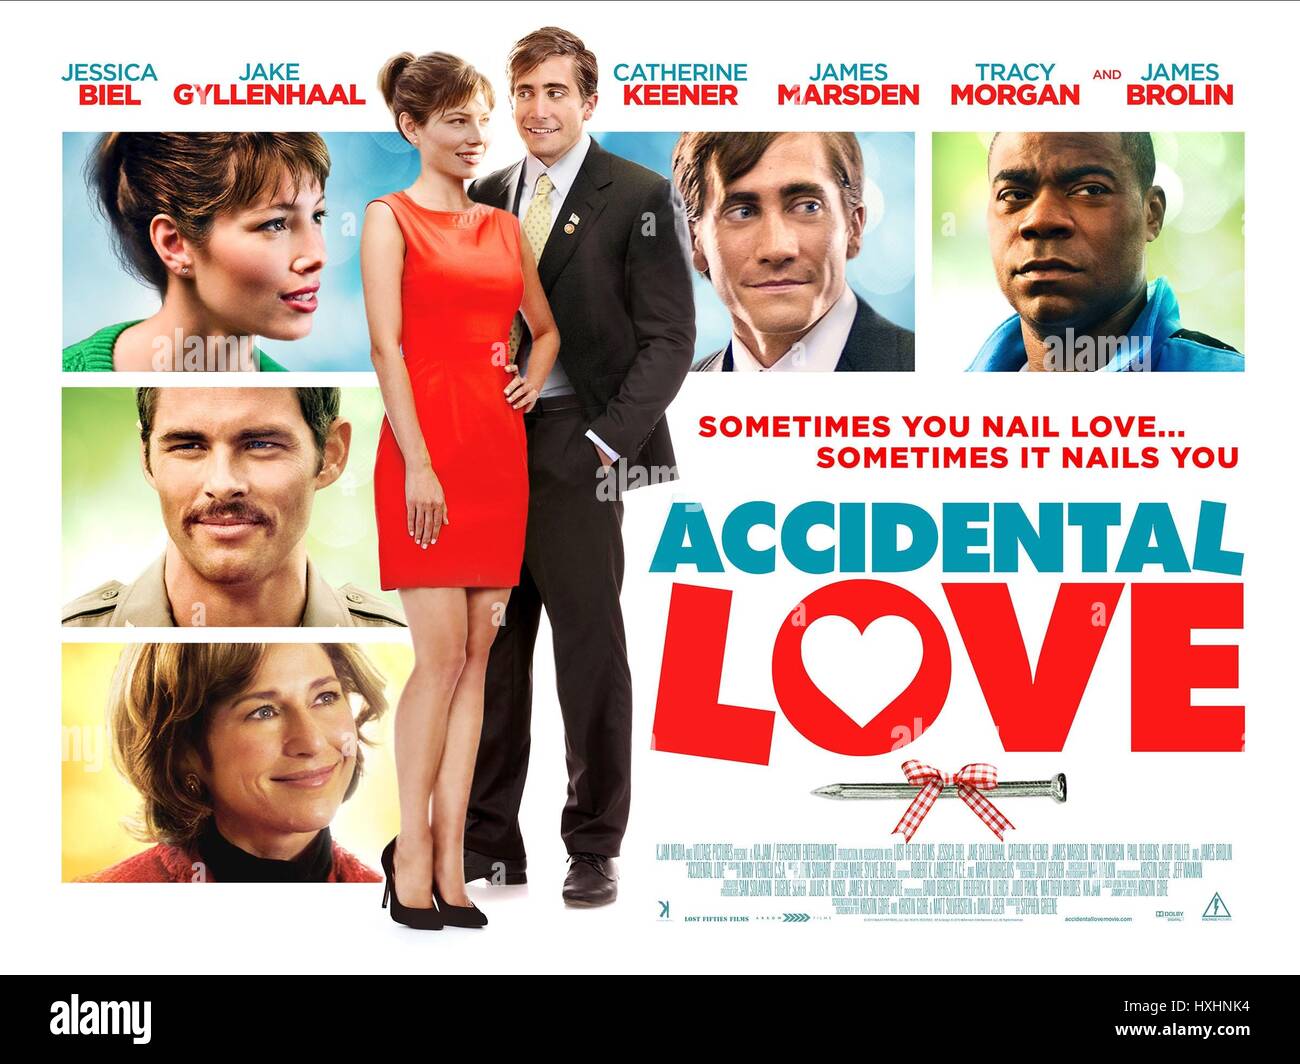 Accidental Love (2022) Jessica Biel